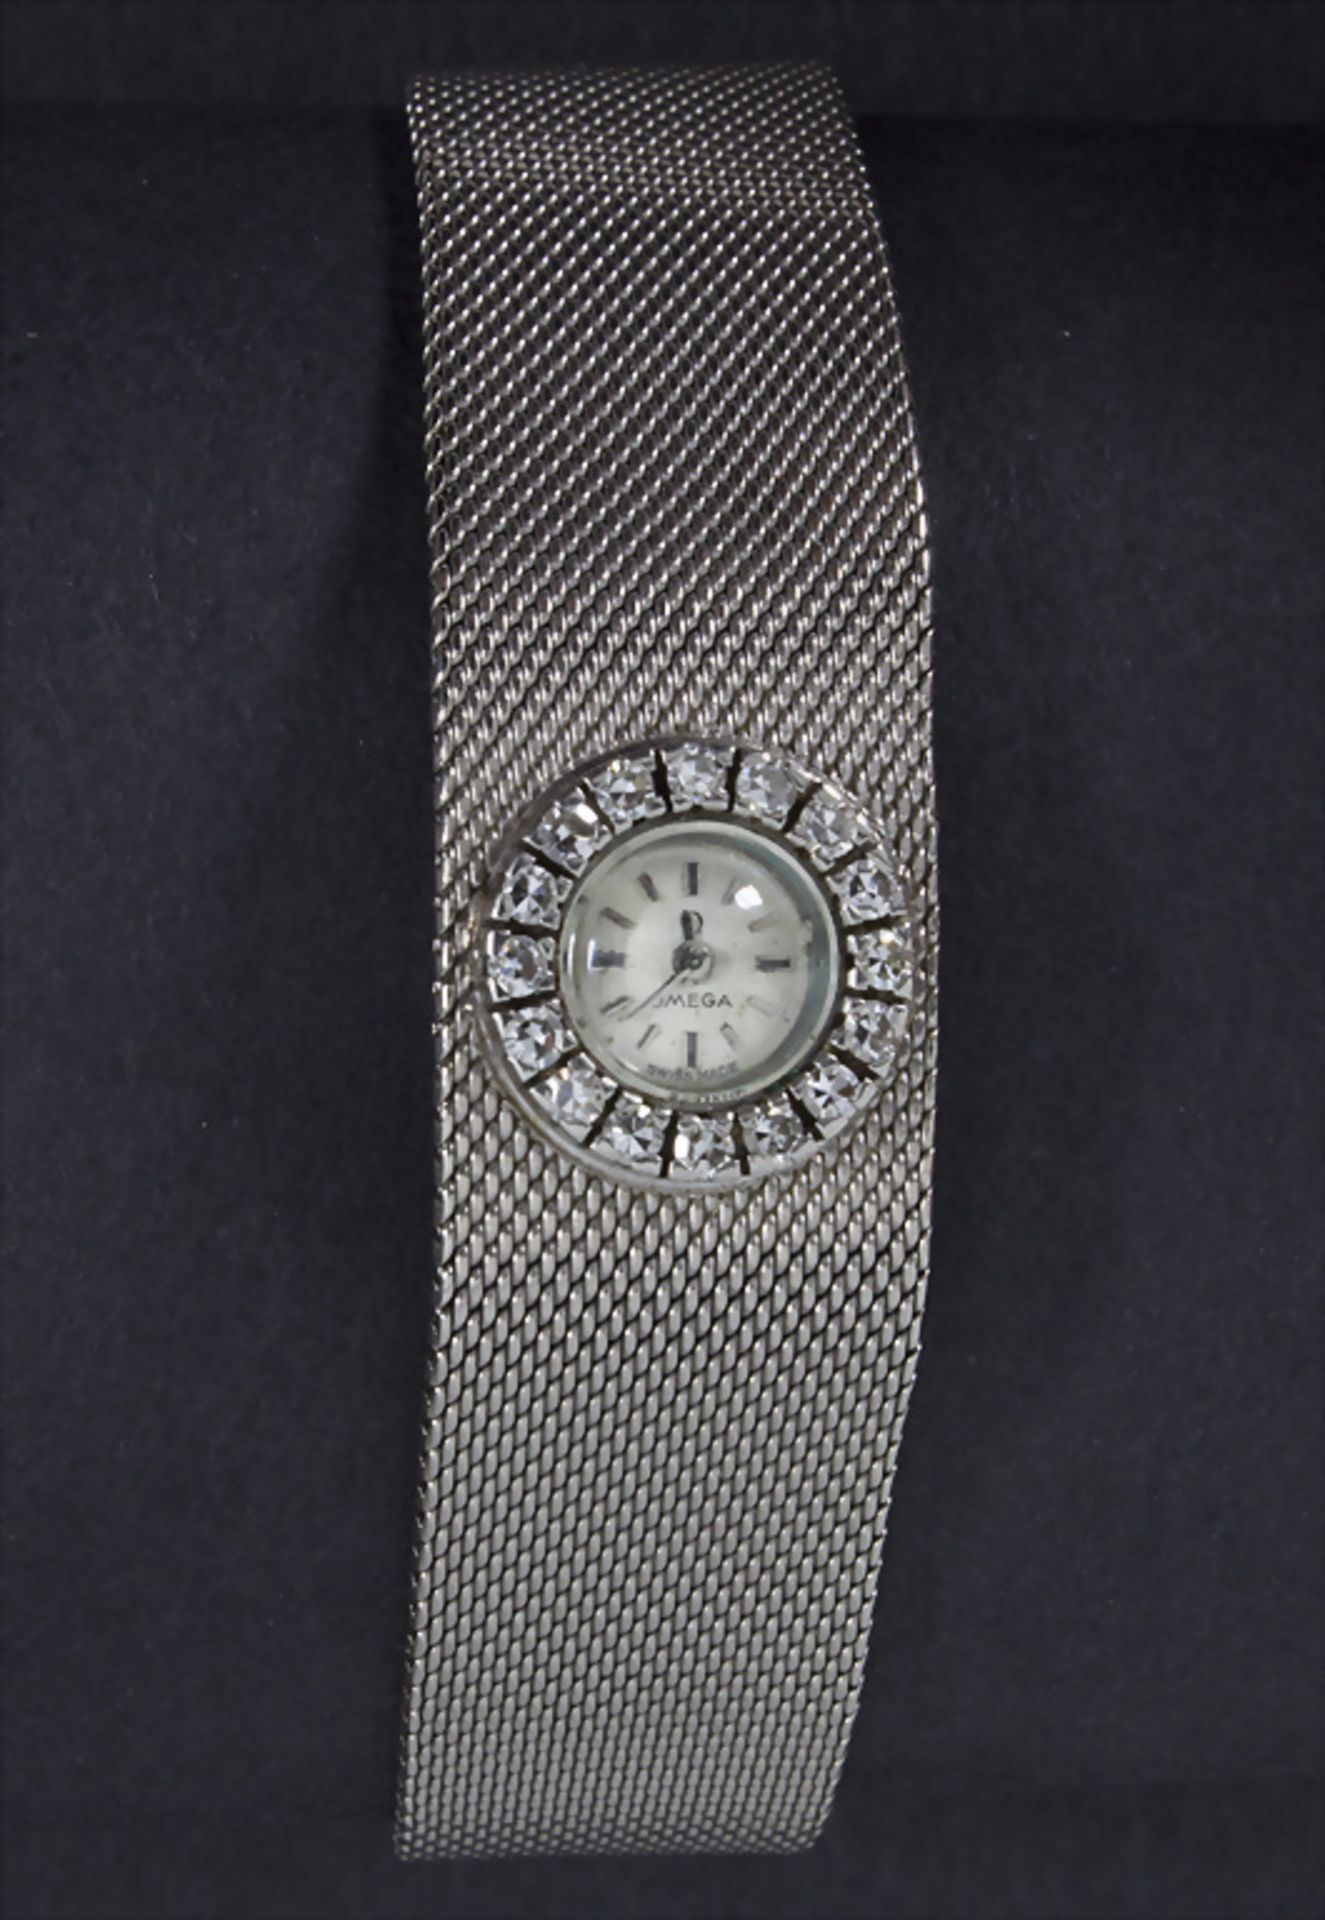 Damenarmbanduhr in Platin mit Diamanten / A ladies platinum wristwatch with diamonds, Omega, ...